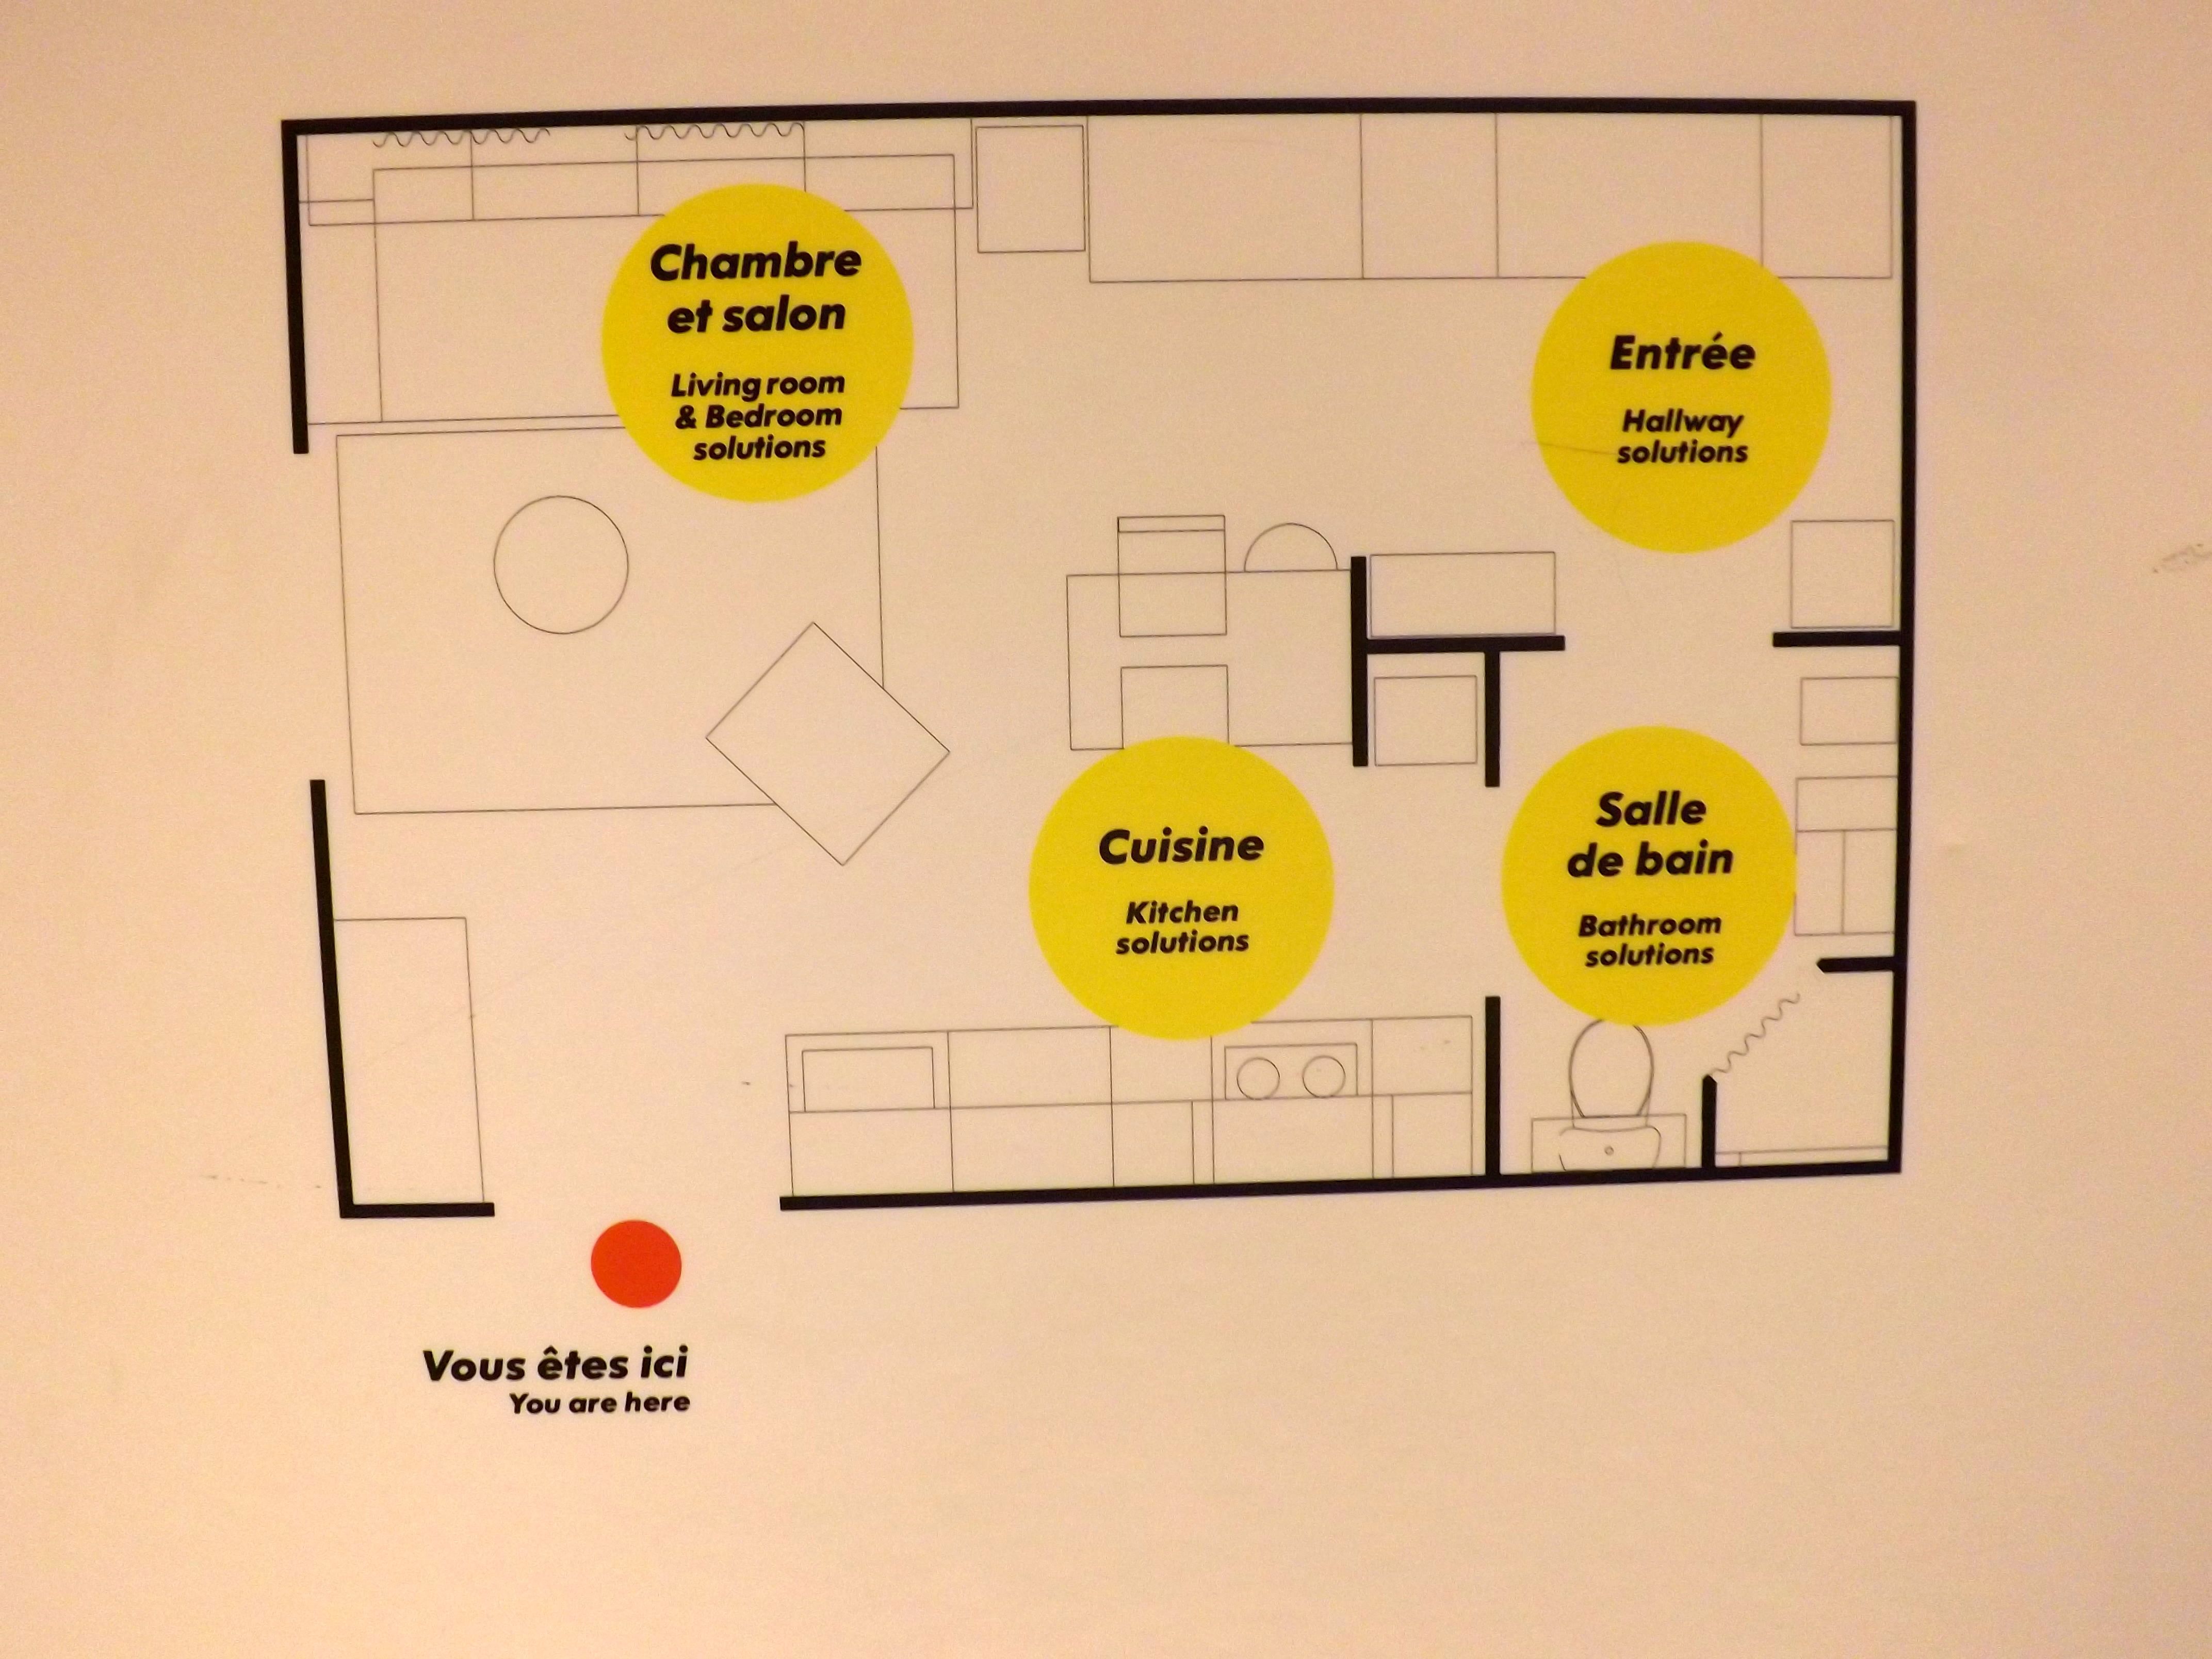 270 sq ft floor plan by IKEA Dream house floor plans